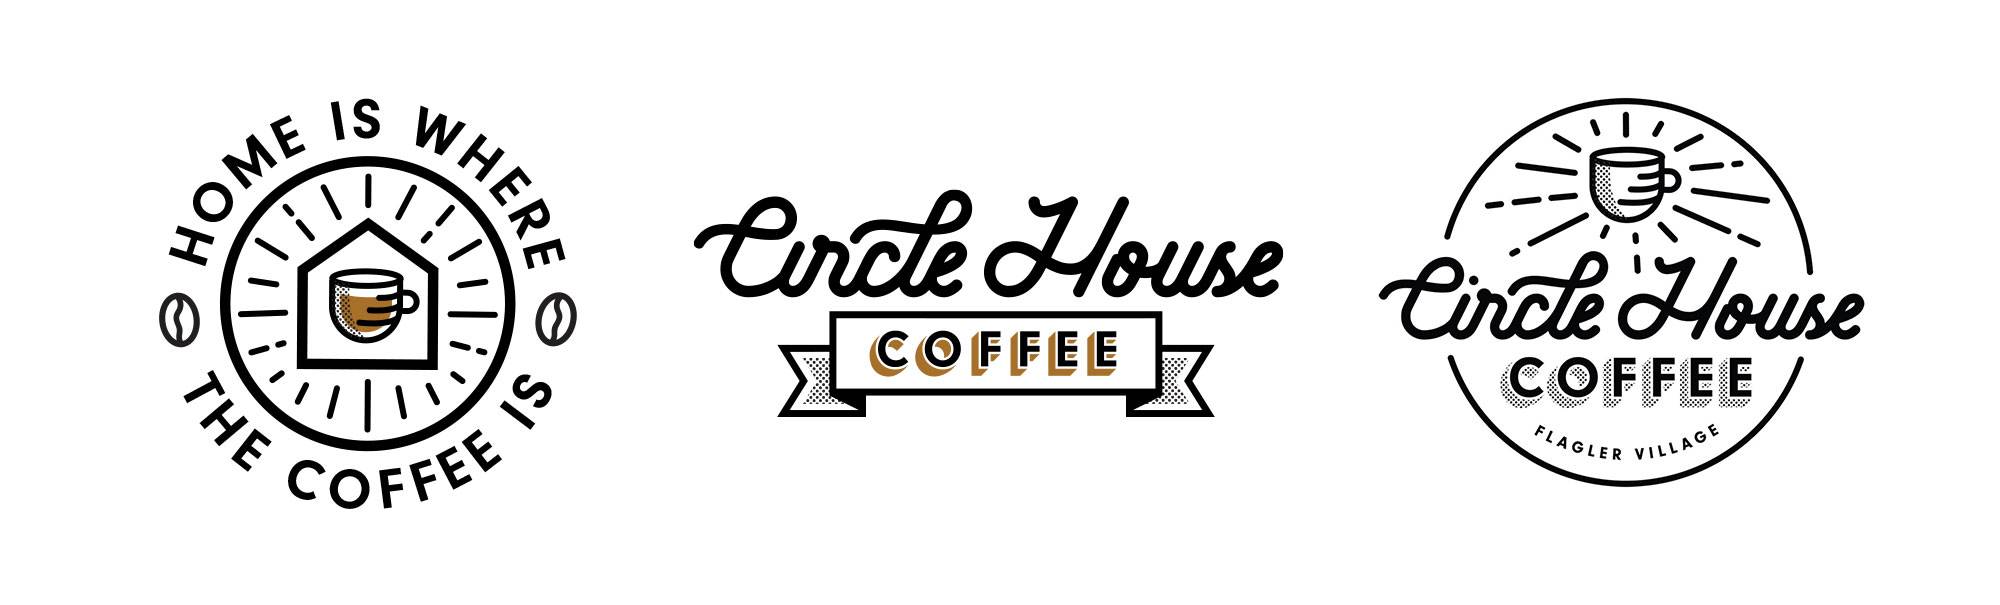 Coffee House Logos